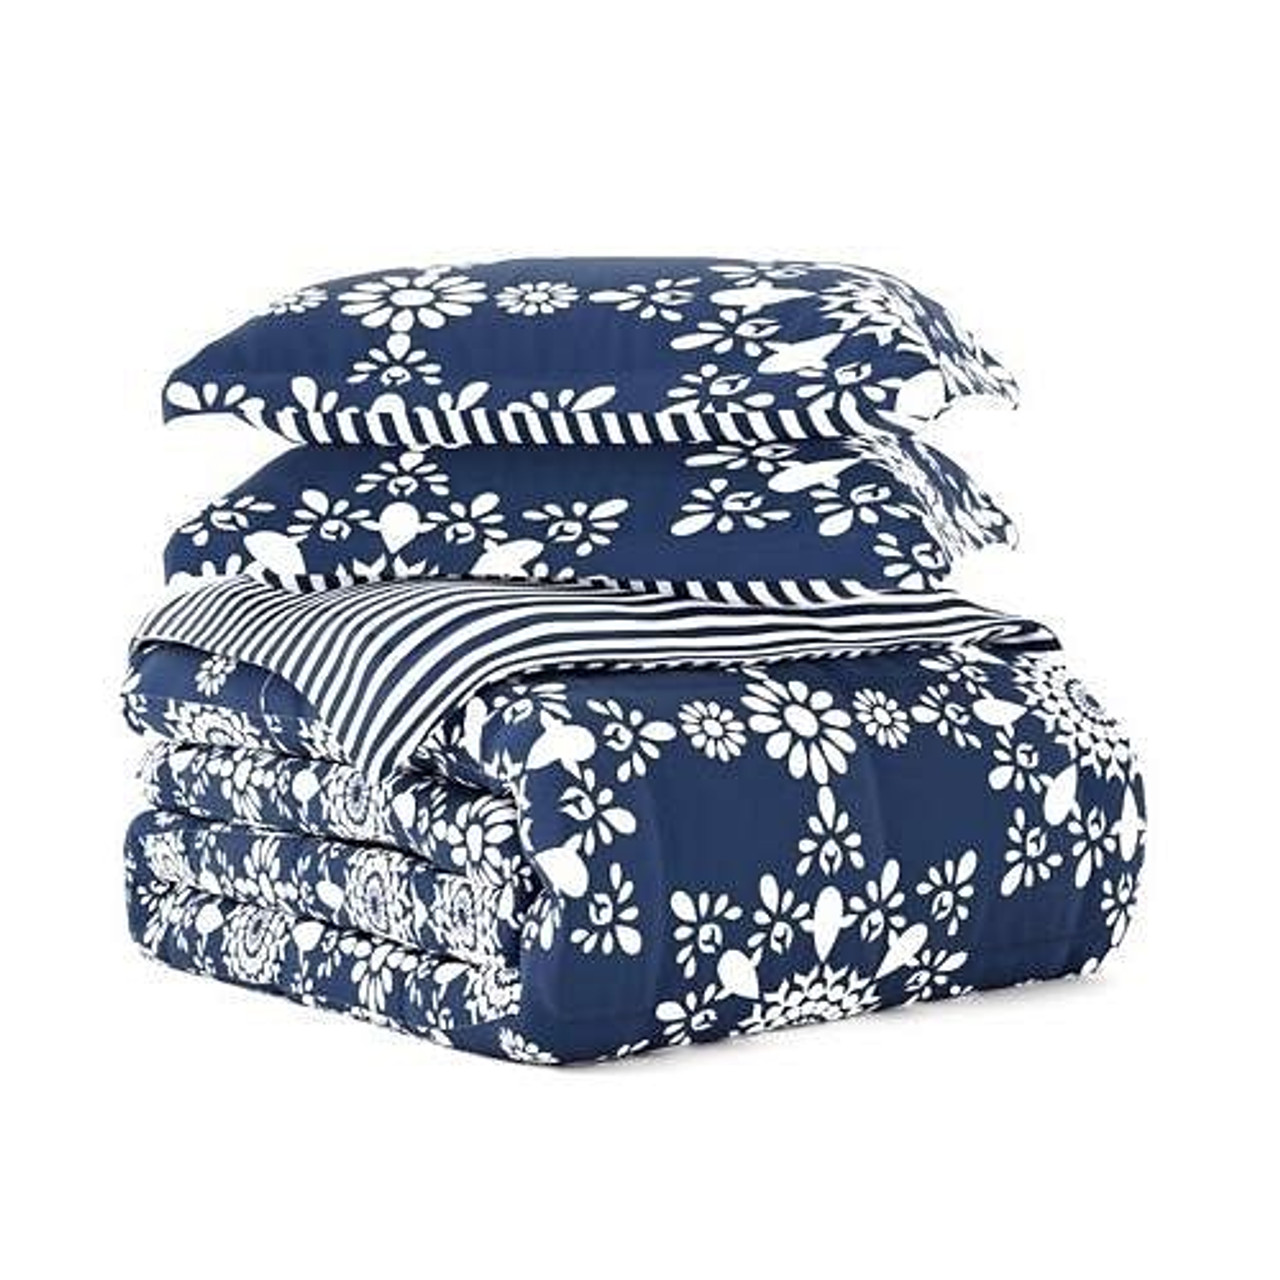 King size 3-Piece Navy Blue White Reversible Floral Striped Comforter Set